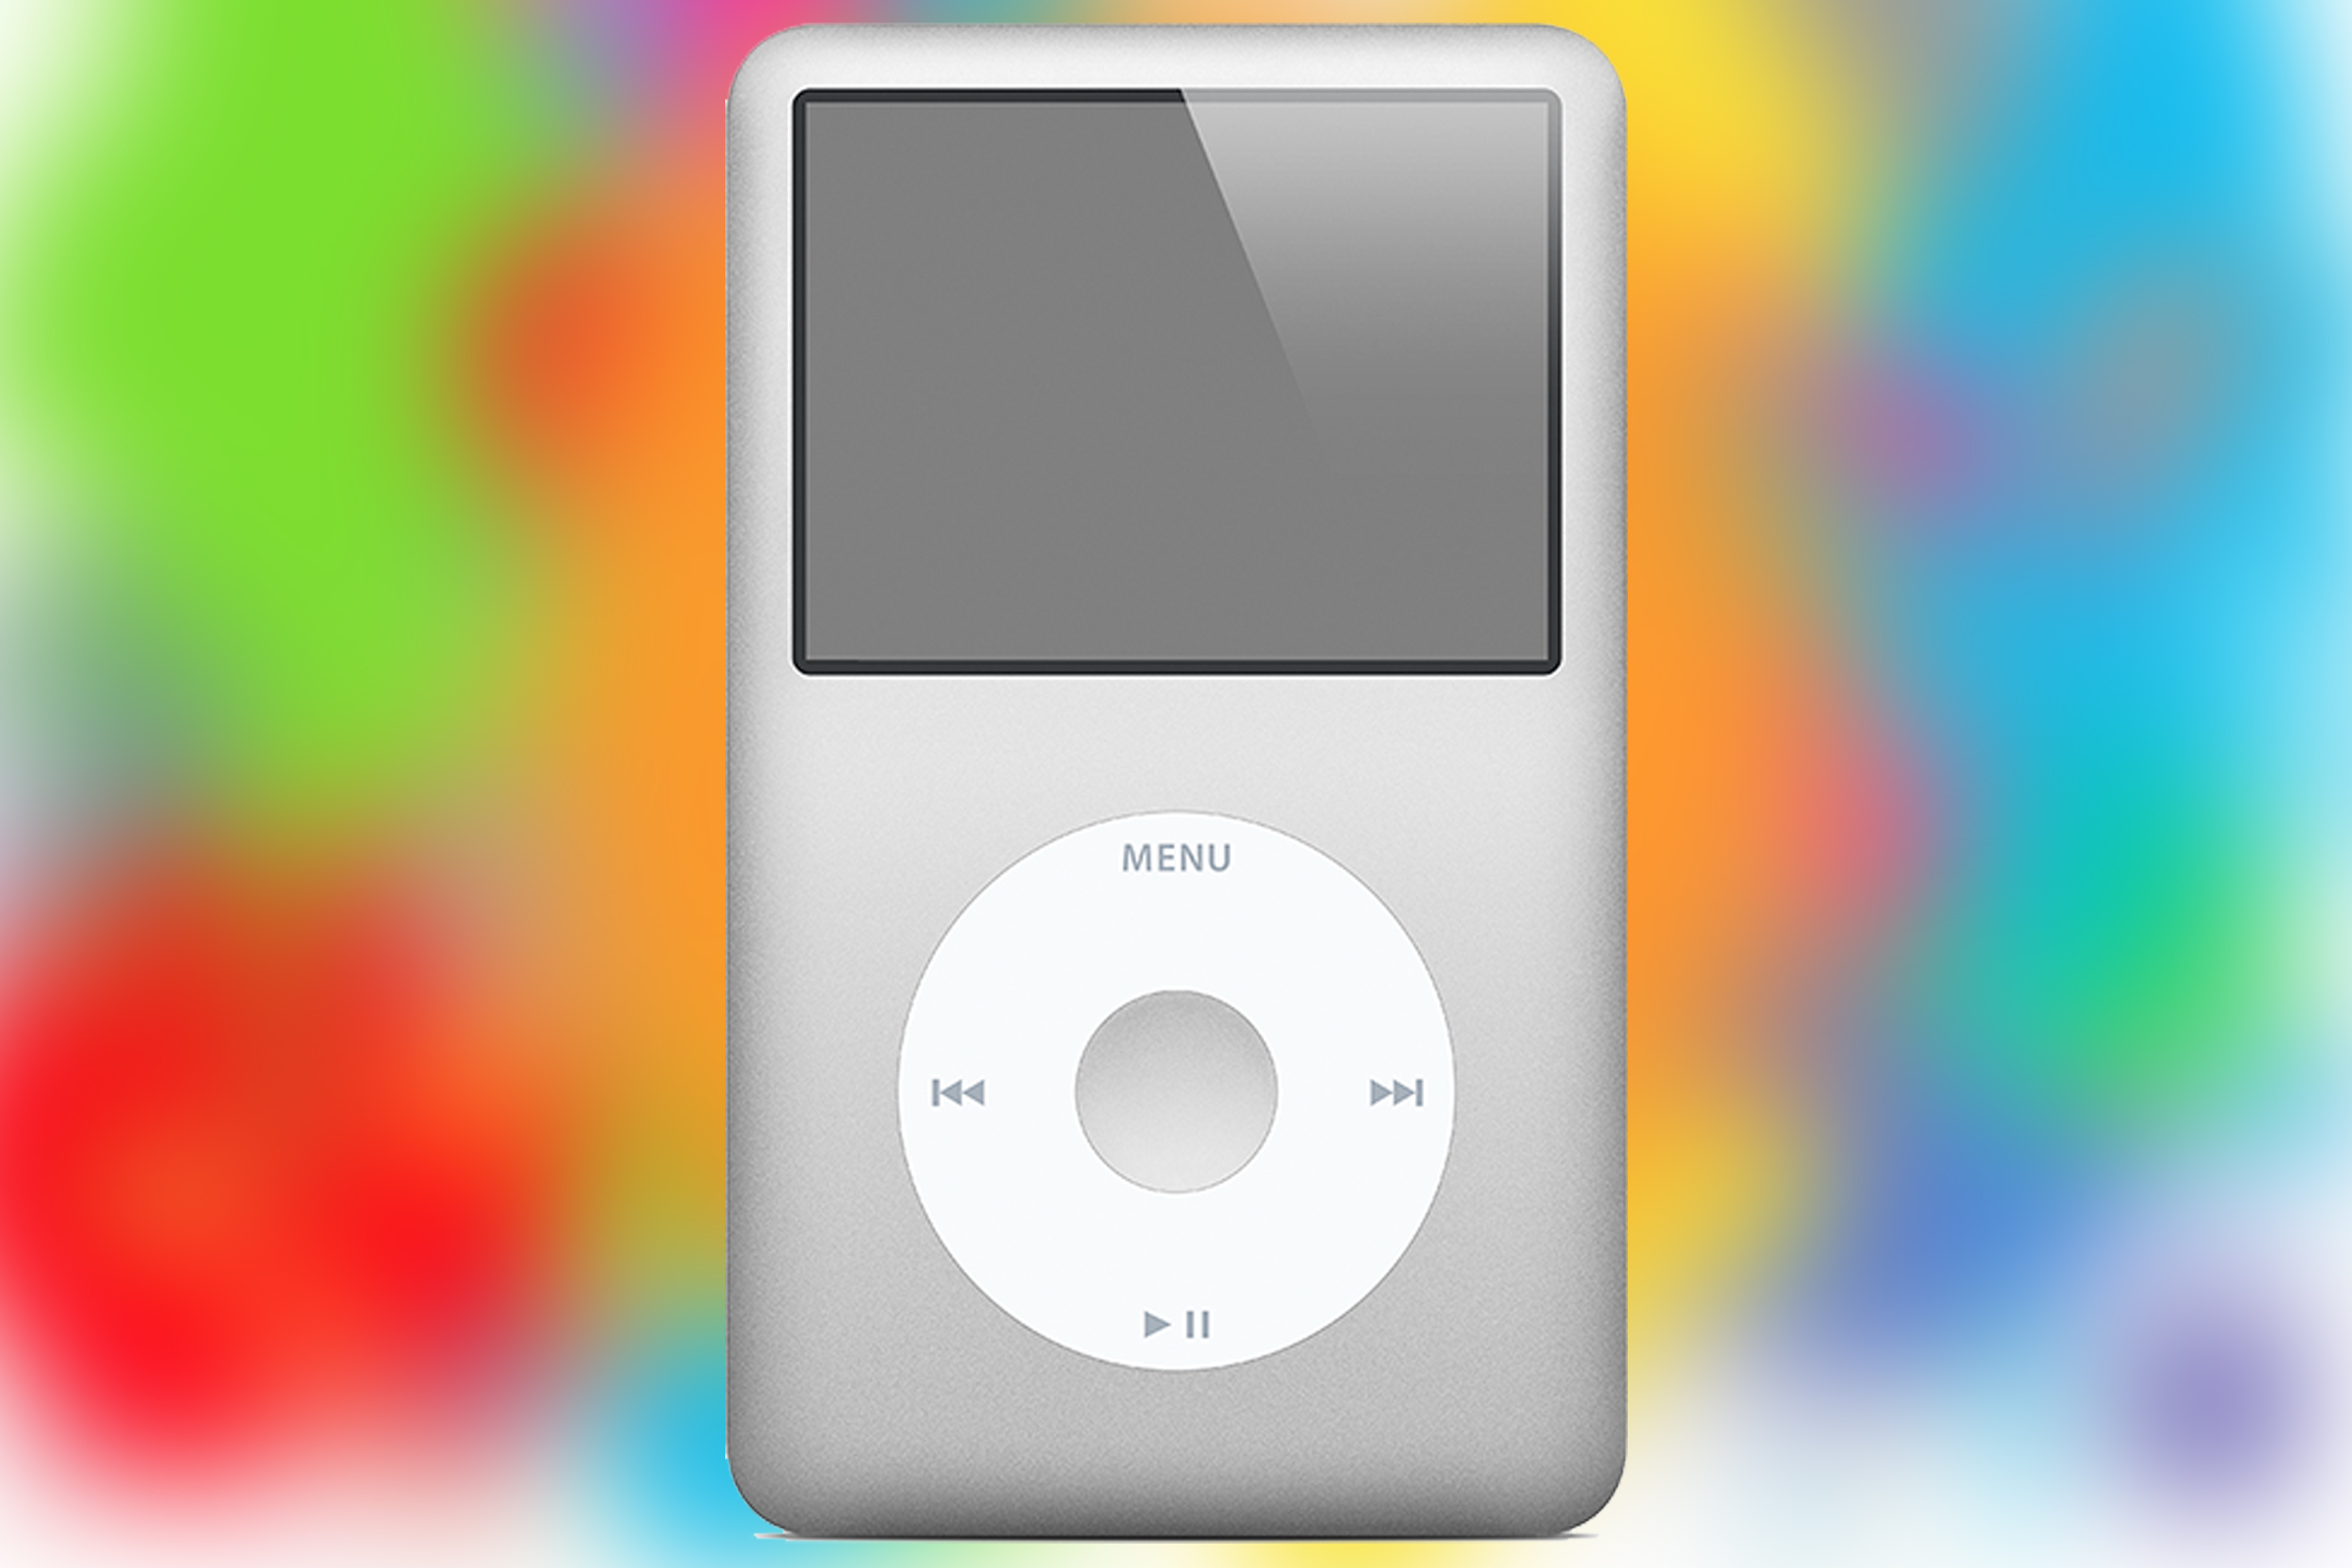 iPod clasic